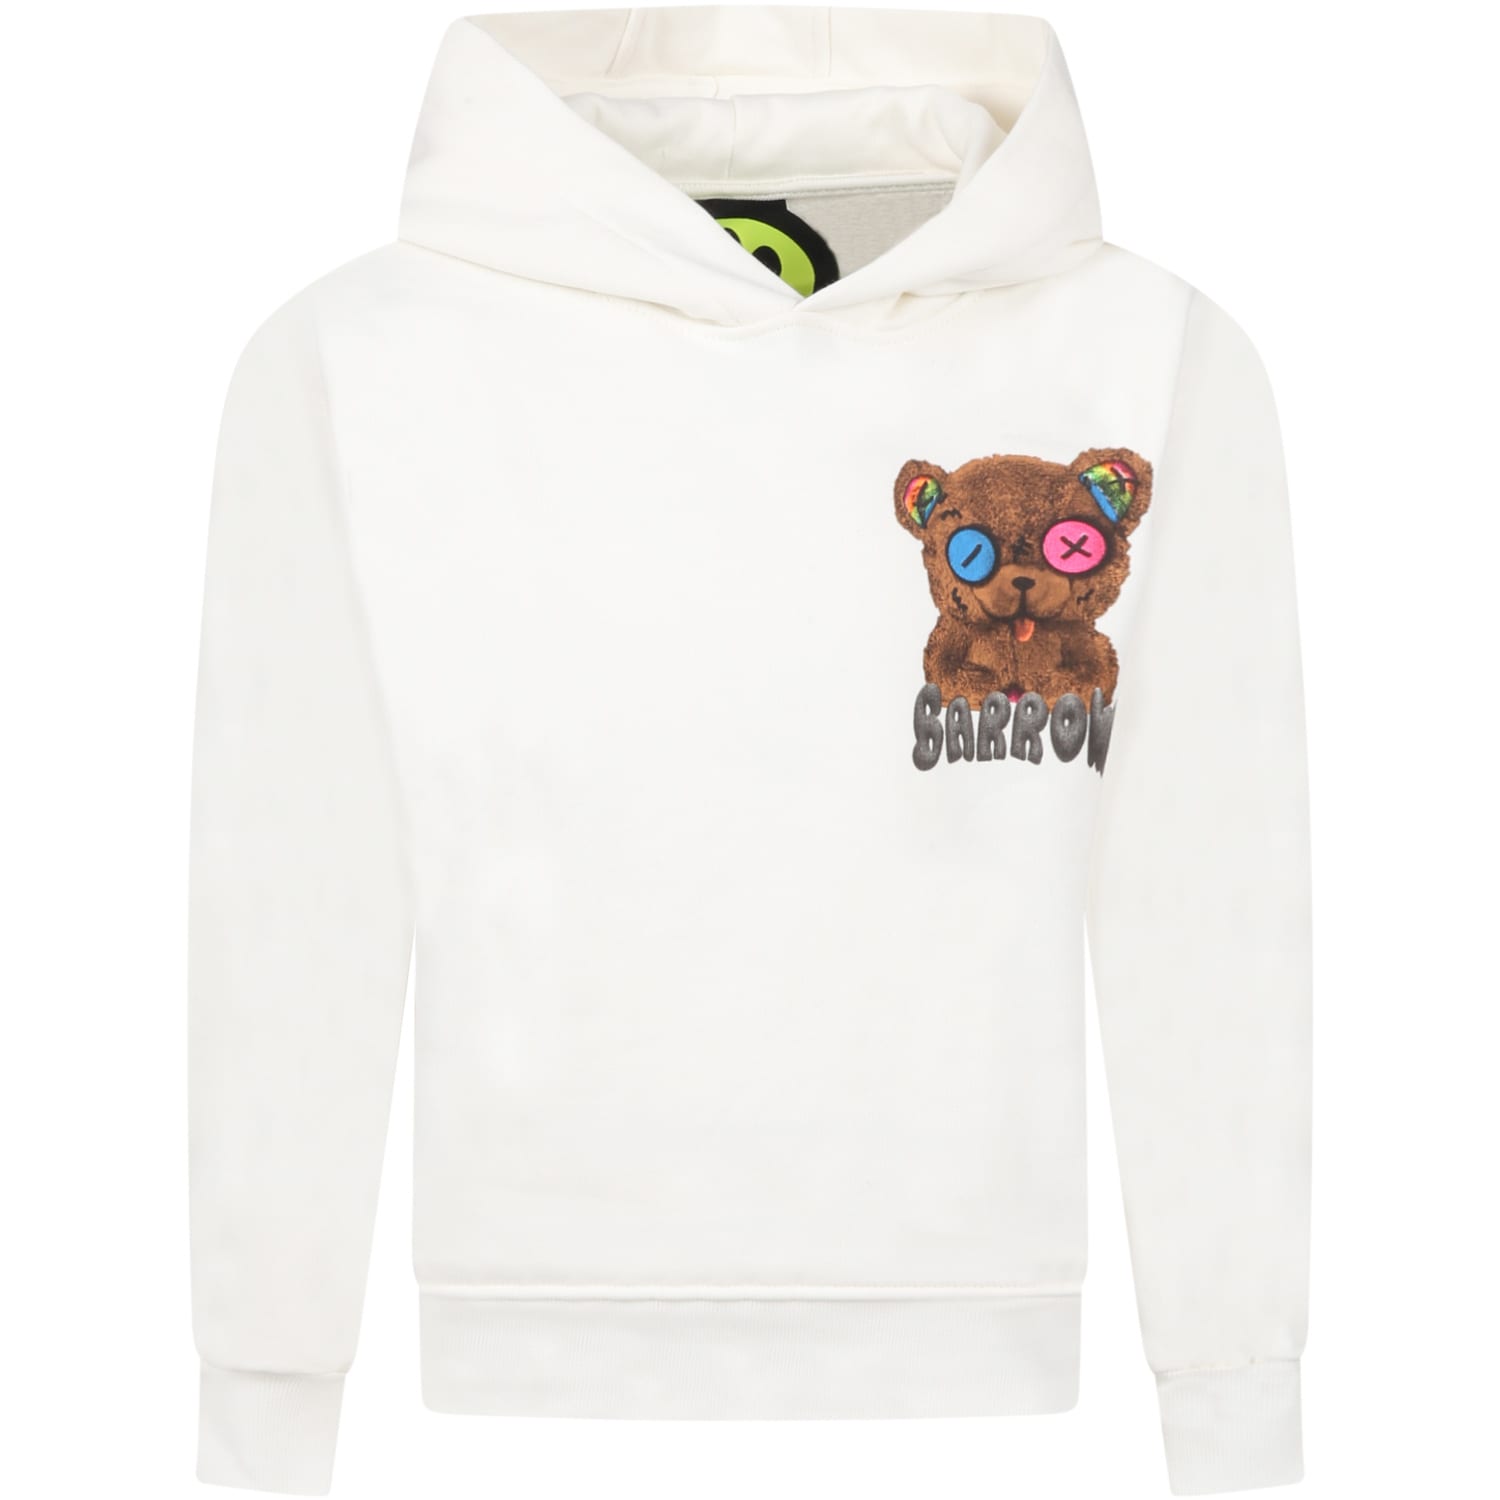 Barrow White Sweatshirt For Kids With Bear